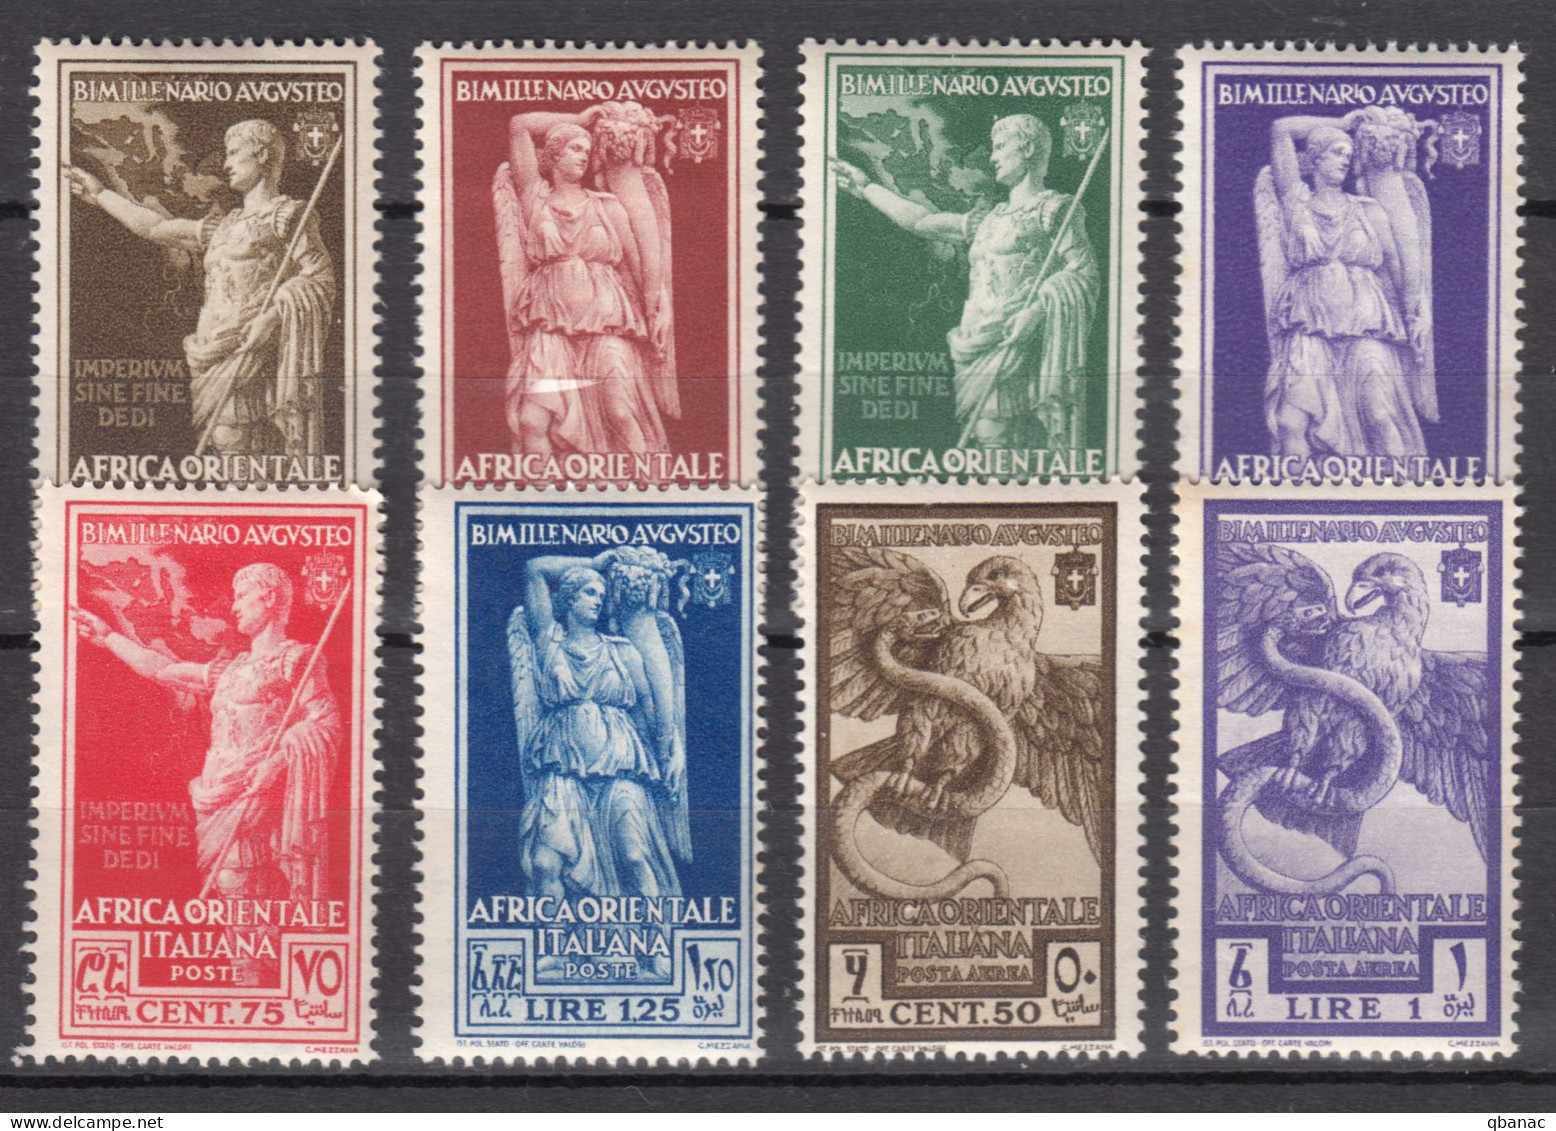 Italy Colonies East Africa 1938 Sassone#21-26 + Posta Aerea #A14-A15 Mint Never Hinged - Africa Orientale Italiana